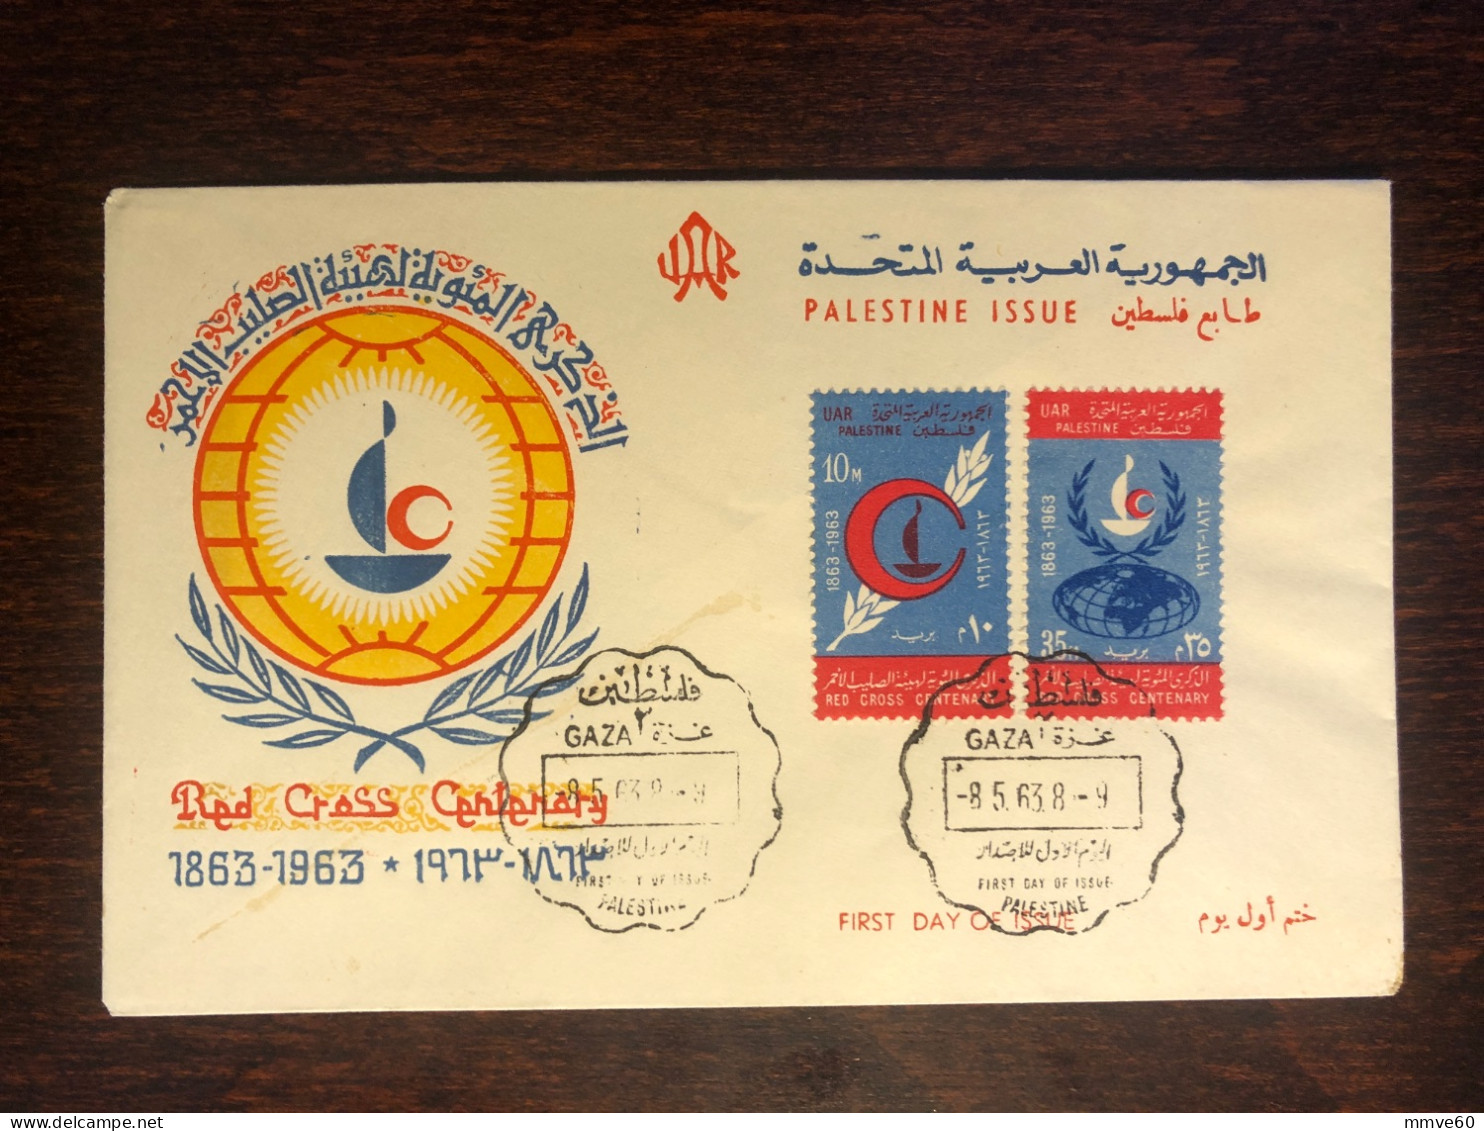 EGYPT UAR PALESTINE GAZA FDC COVER 1963 YEAR  RED CROSS HEALTH MEDICINE STAMPS - Briefe U. Dokumente